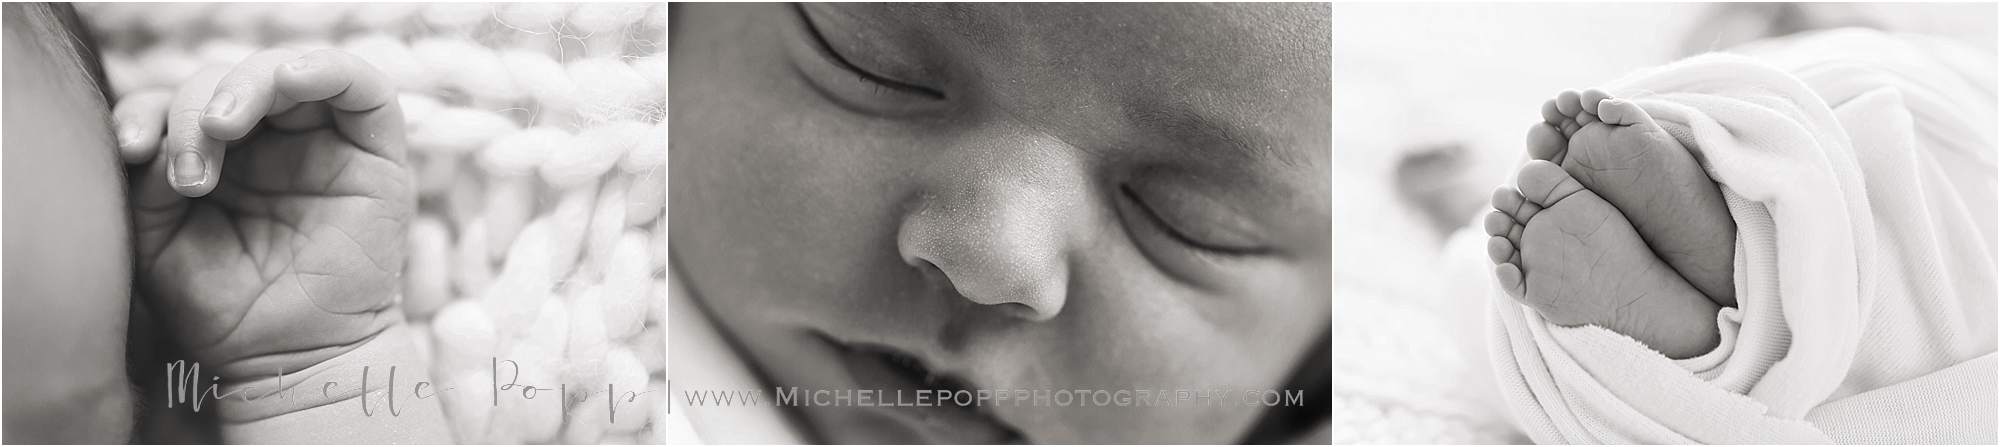 san-diego-newborn-photographer-michelle-popp-photography_0503